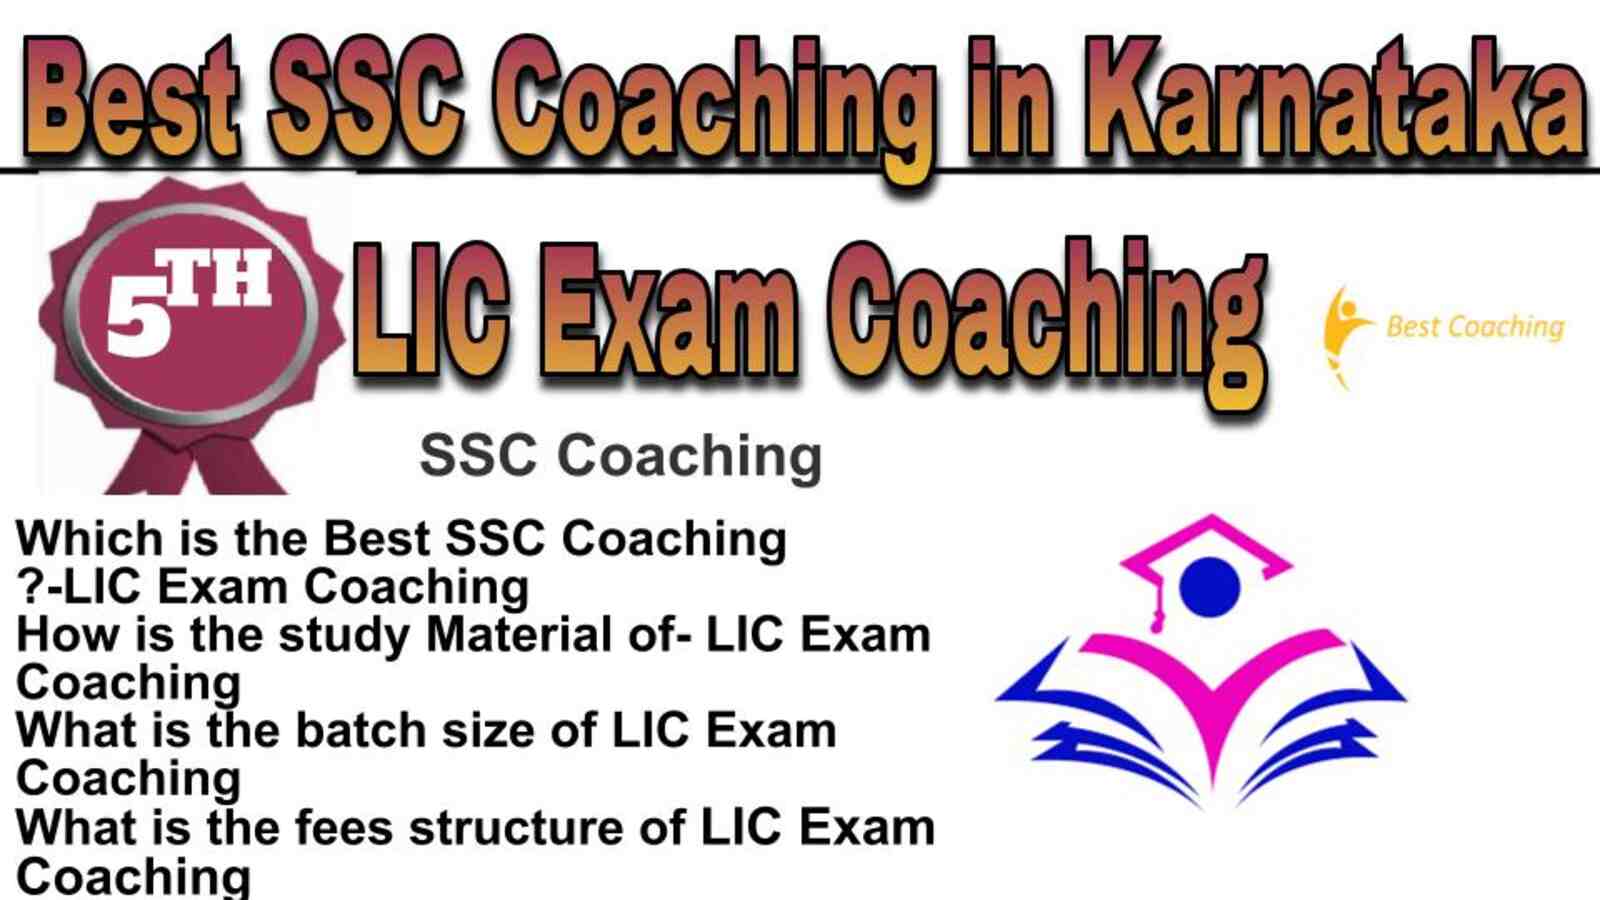 Rank 5 best SSC coaching in Karnataka